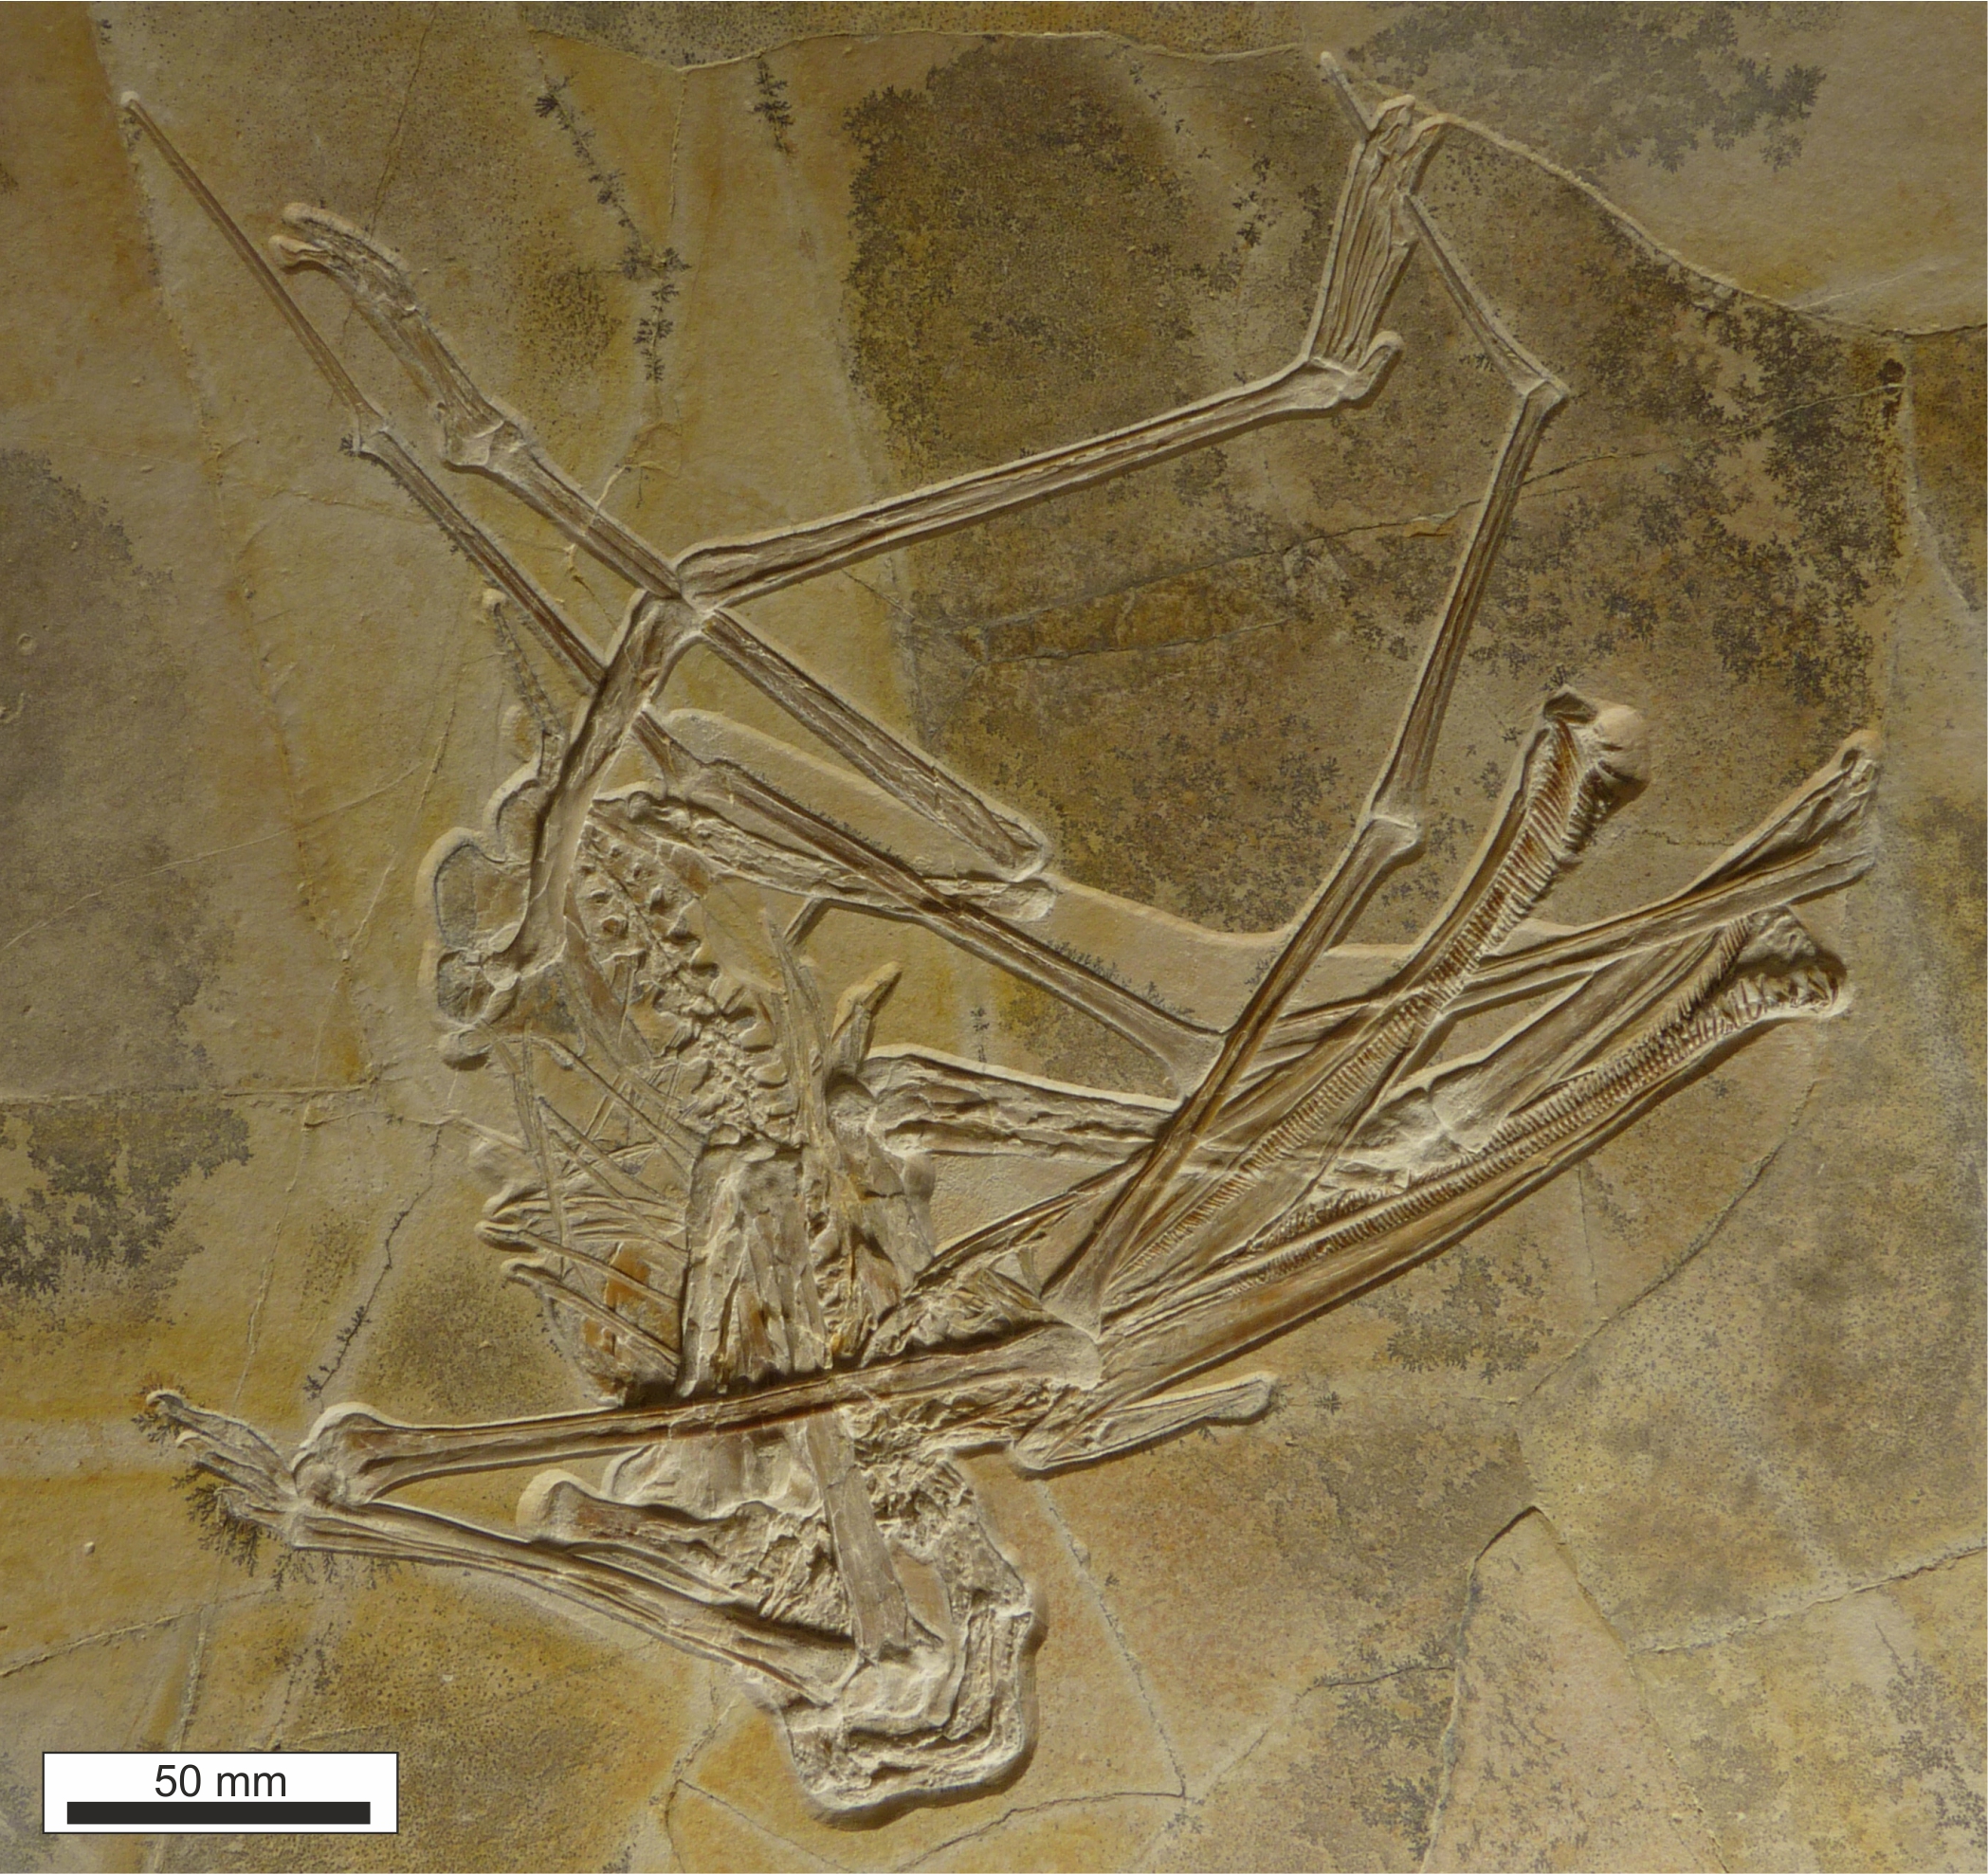 Bones of Balaenognathus maeuseri found in a slab of limestone